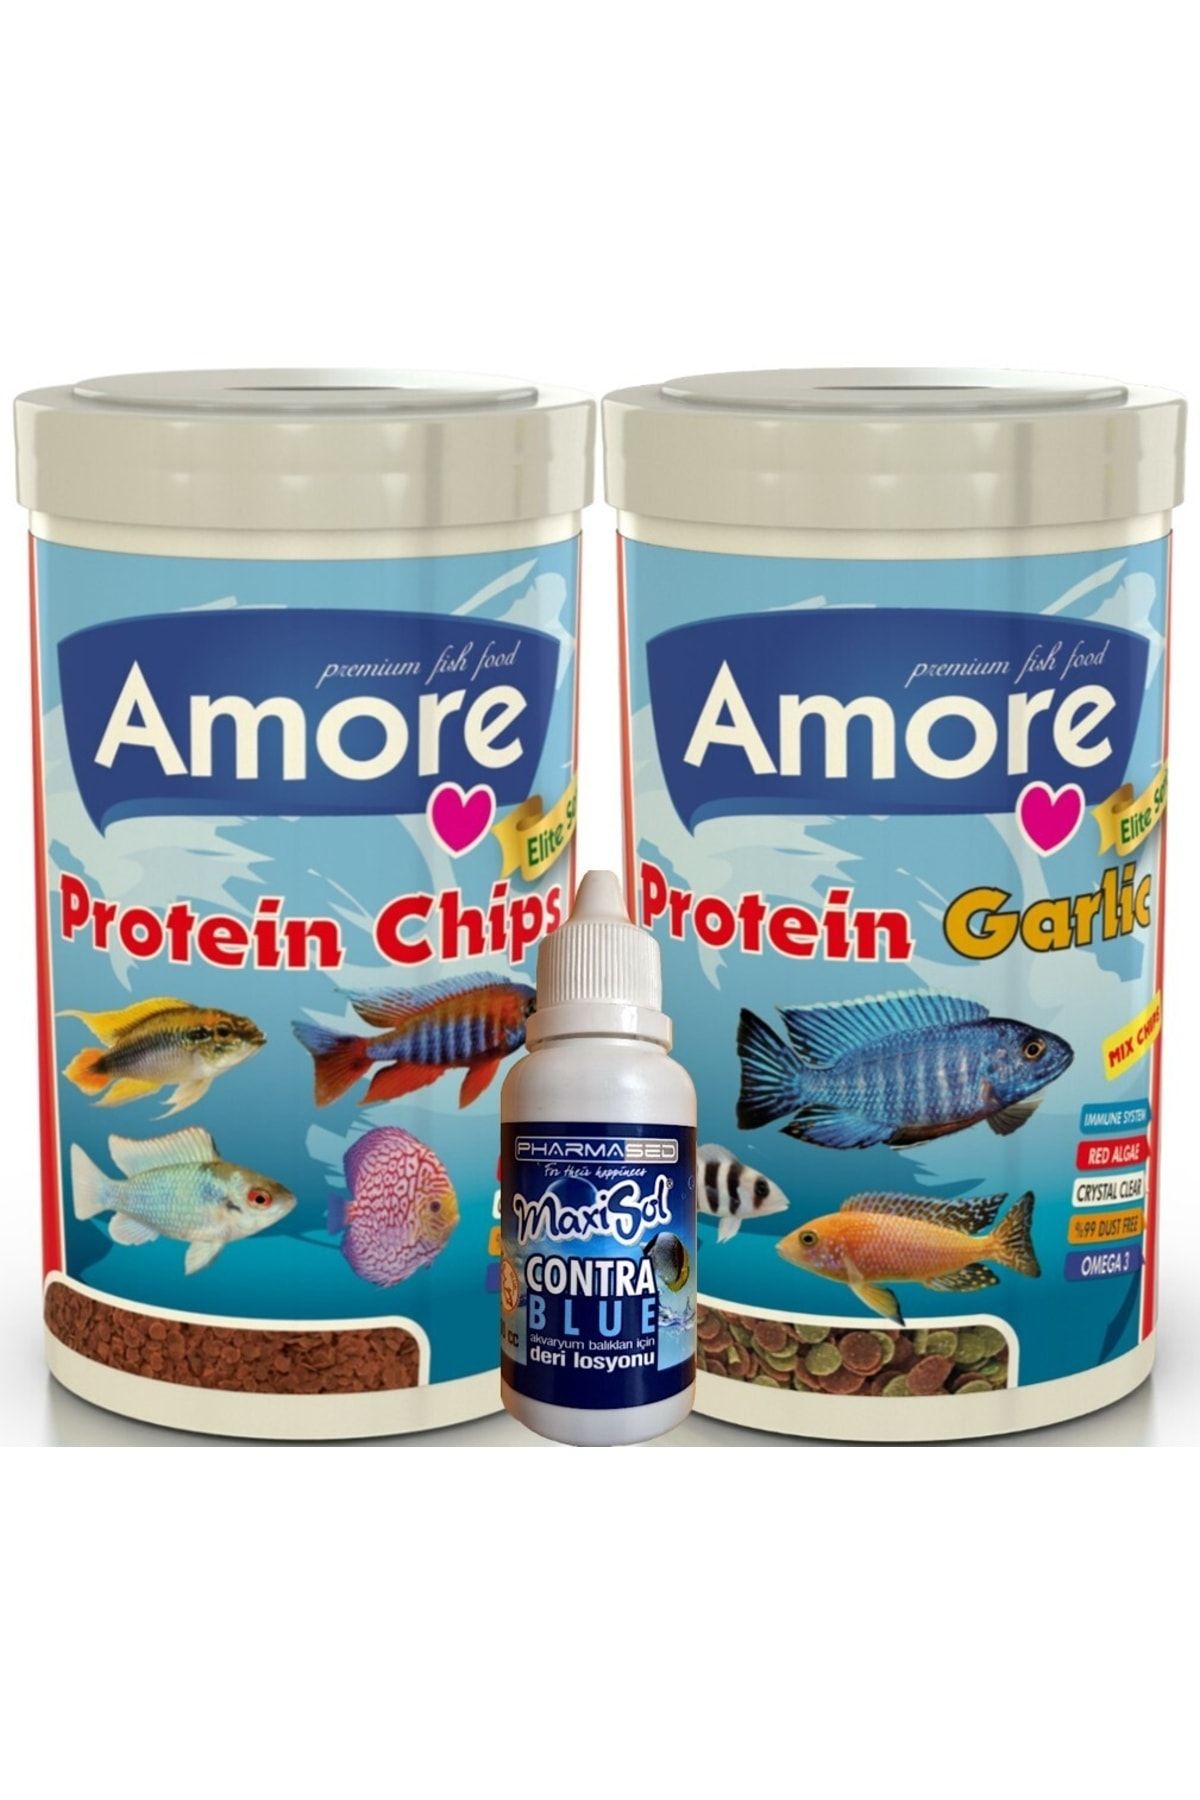 Amore Elite 50-protein Red Algae Chips Ve 48-protein Garlic 1000 Ml Malawi Balik Yemi Ve Contrablue